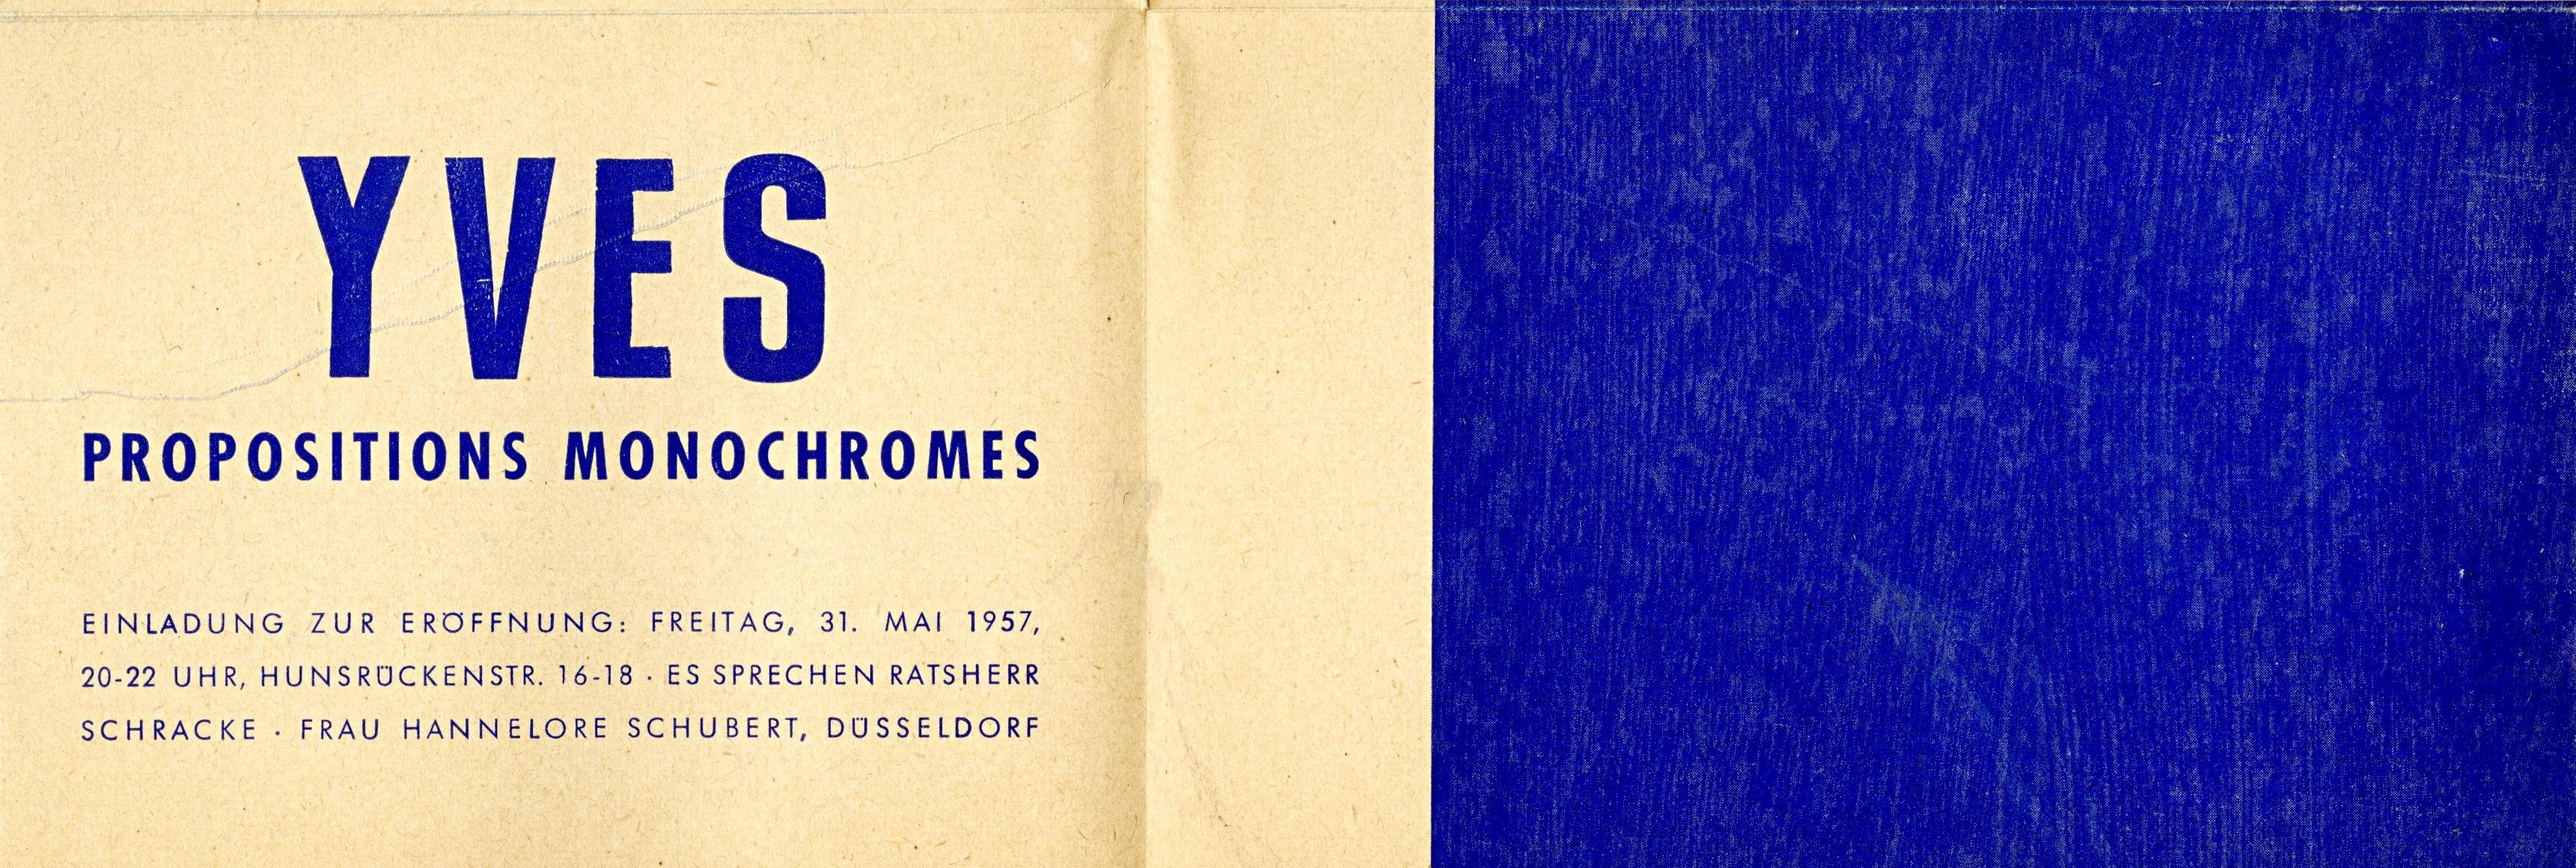 L'invitation d'Yves Klein Propositions Monochromes avec IKB (International Klein Blue) en vente 1